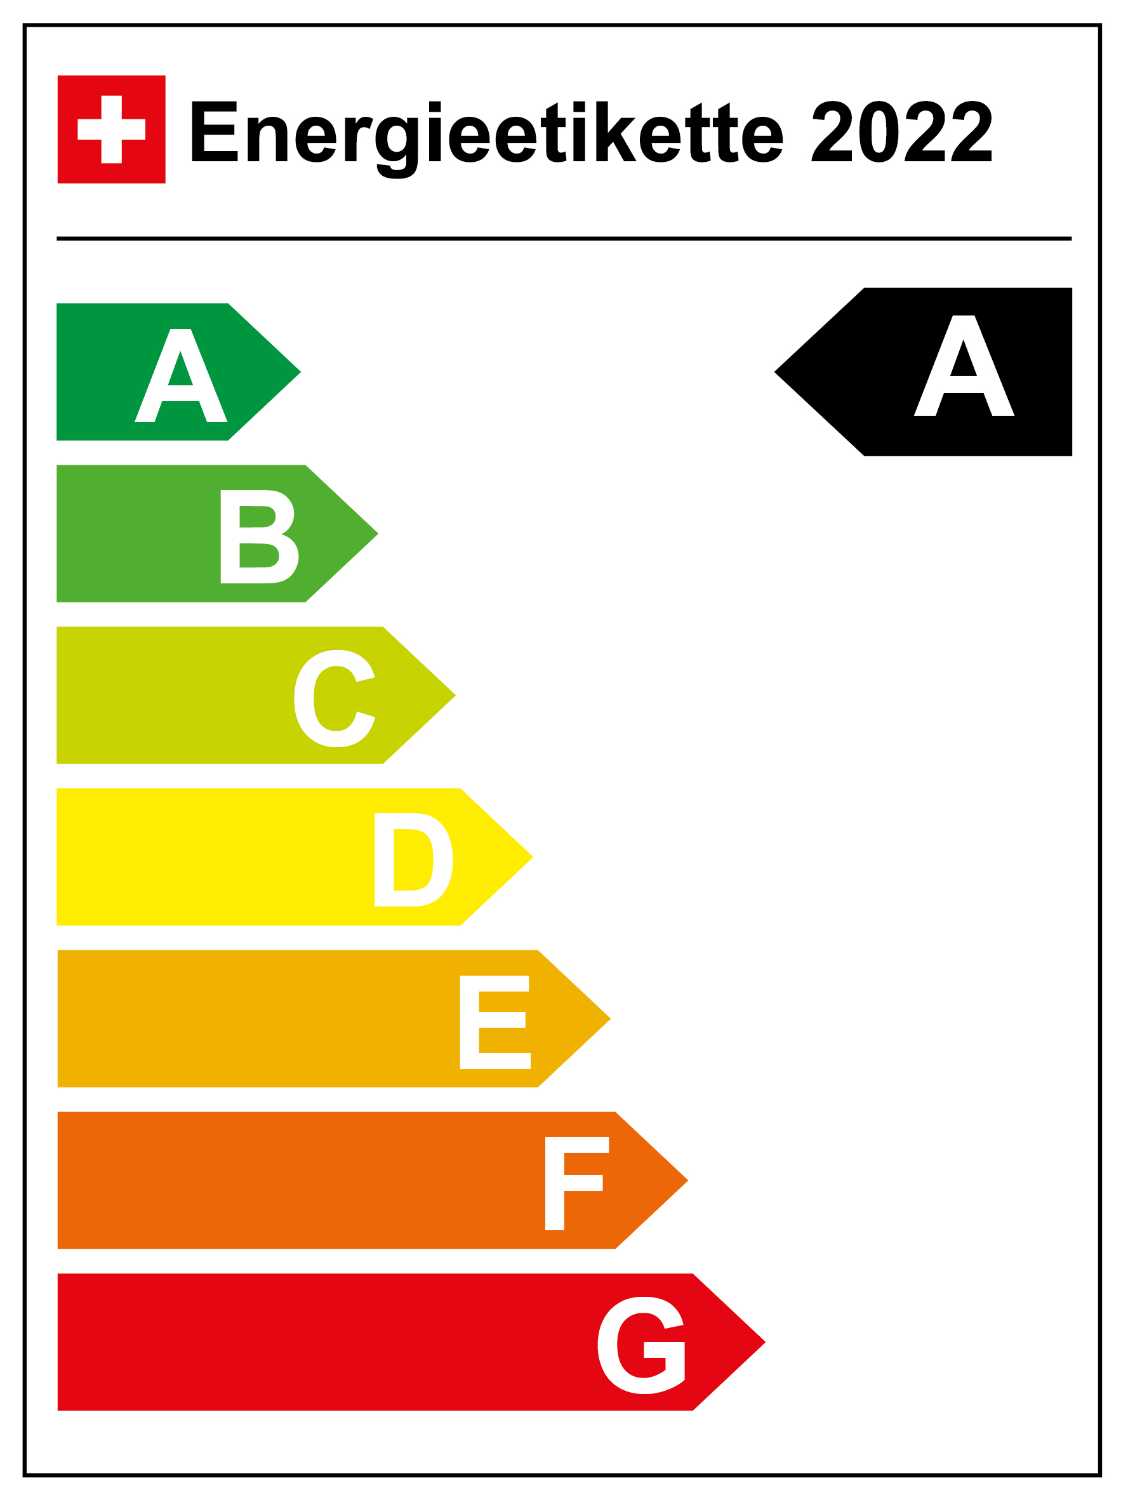 Schweiz - Energieeffizienz-Kategorie A (02/2022)